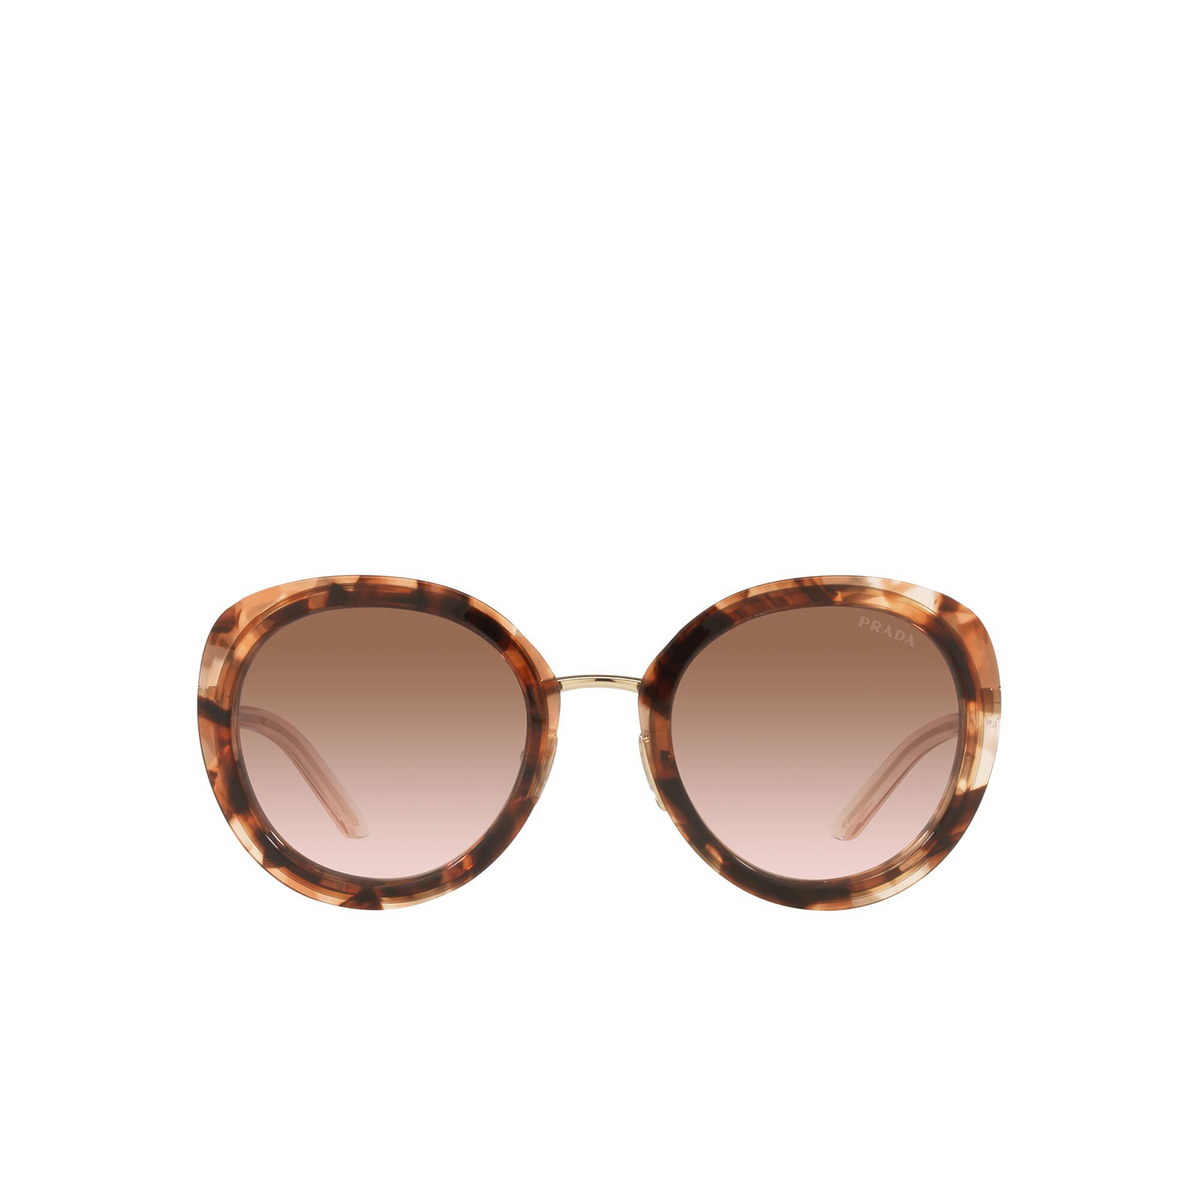 Prada® Oval Sunglasses: PR 54YS color Caramel Tortoise 04Y0A6 - front view.